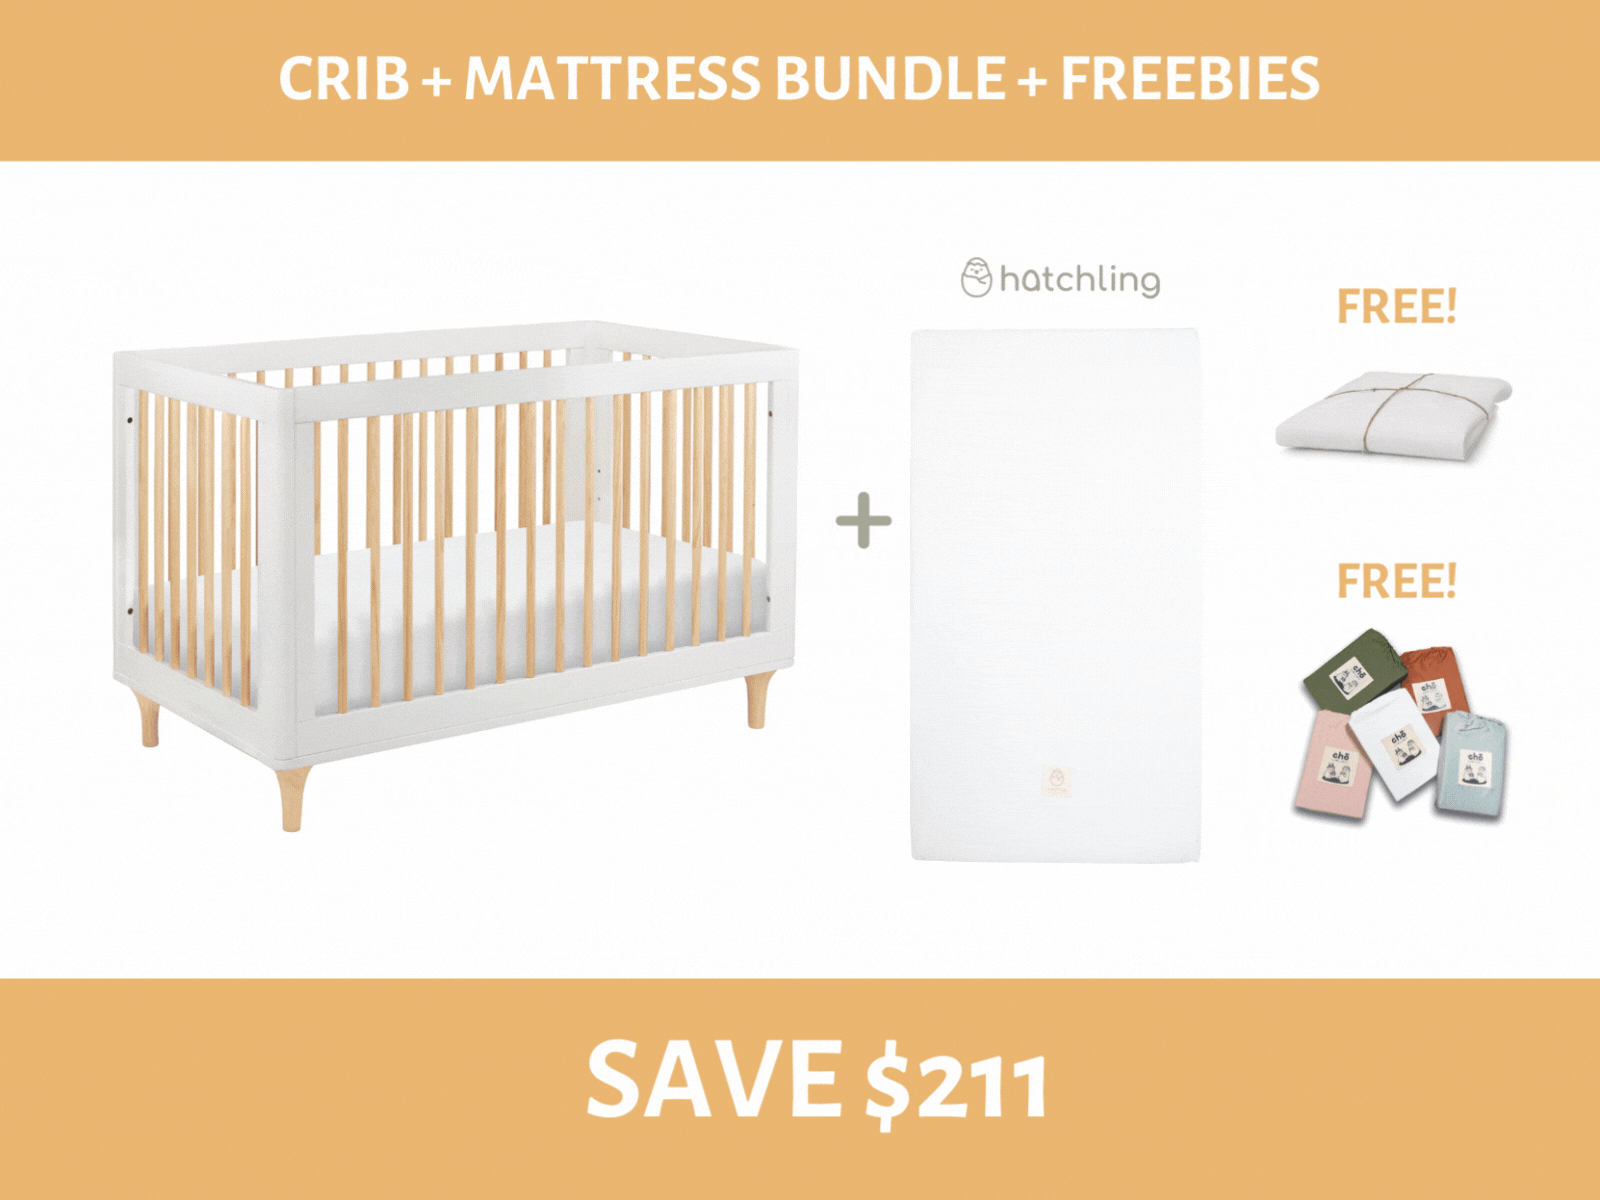 Crib + Hatchling Mattress + Mattress Protector + Cot Sheet Bundle (save $211)